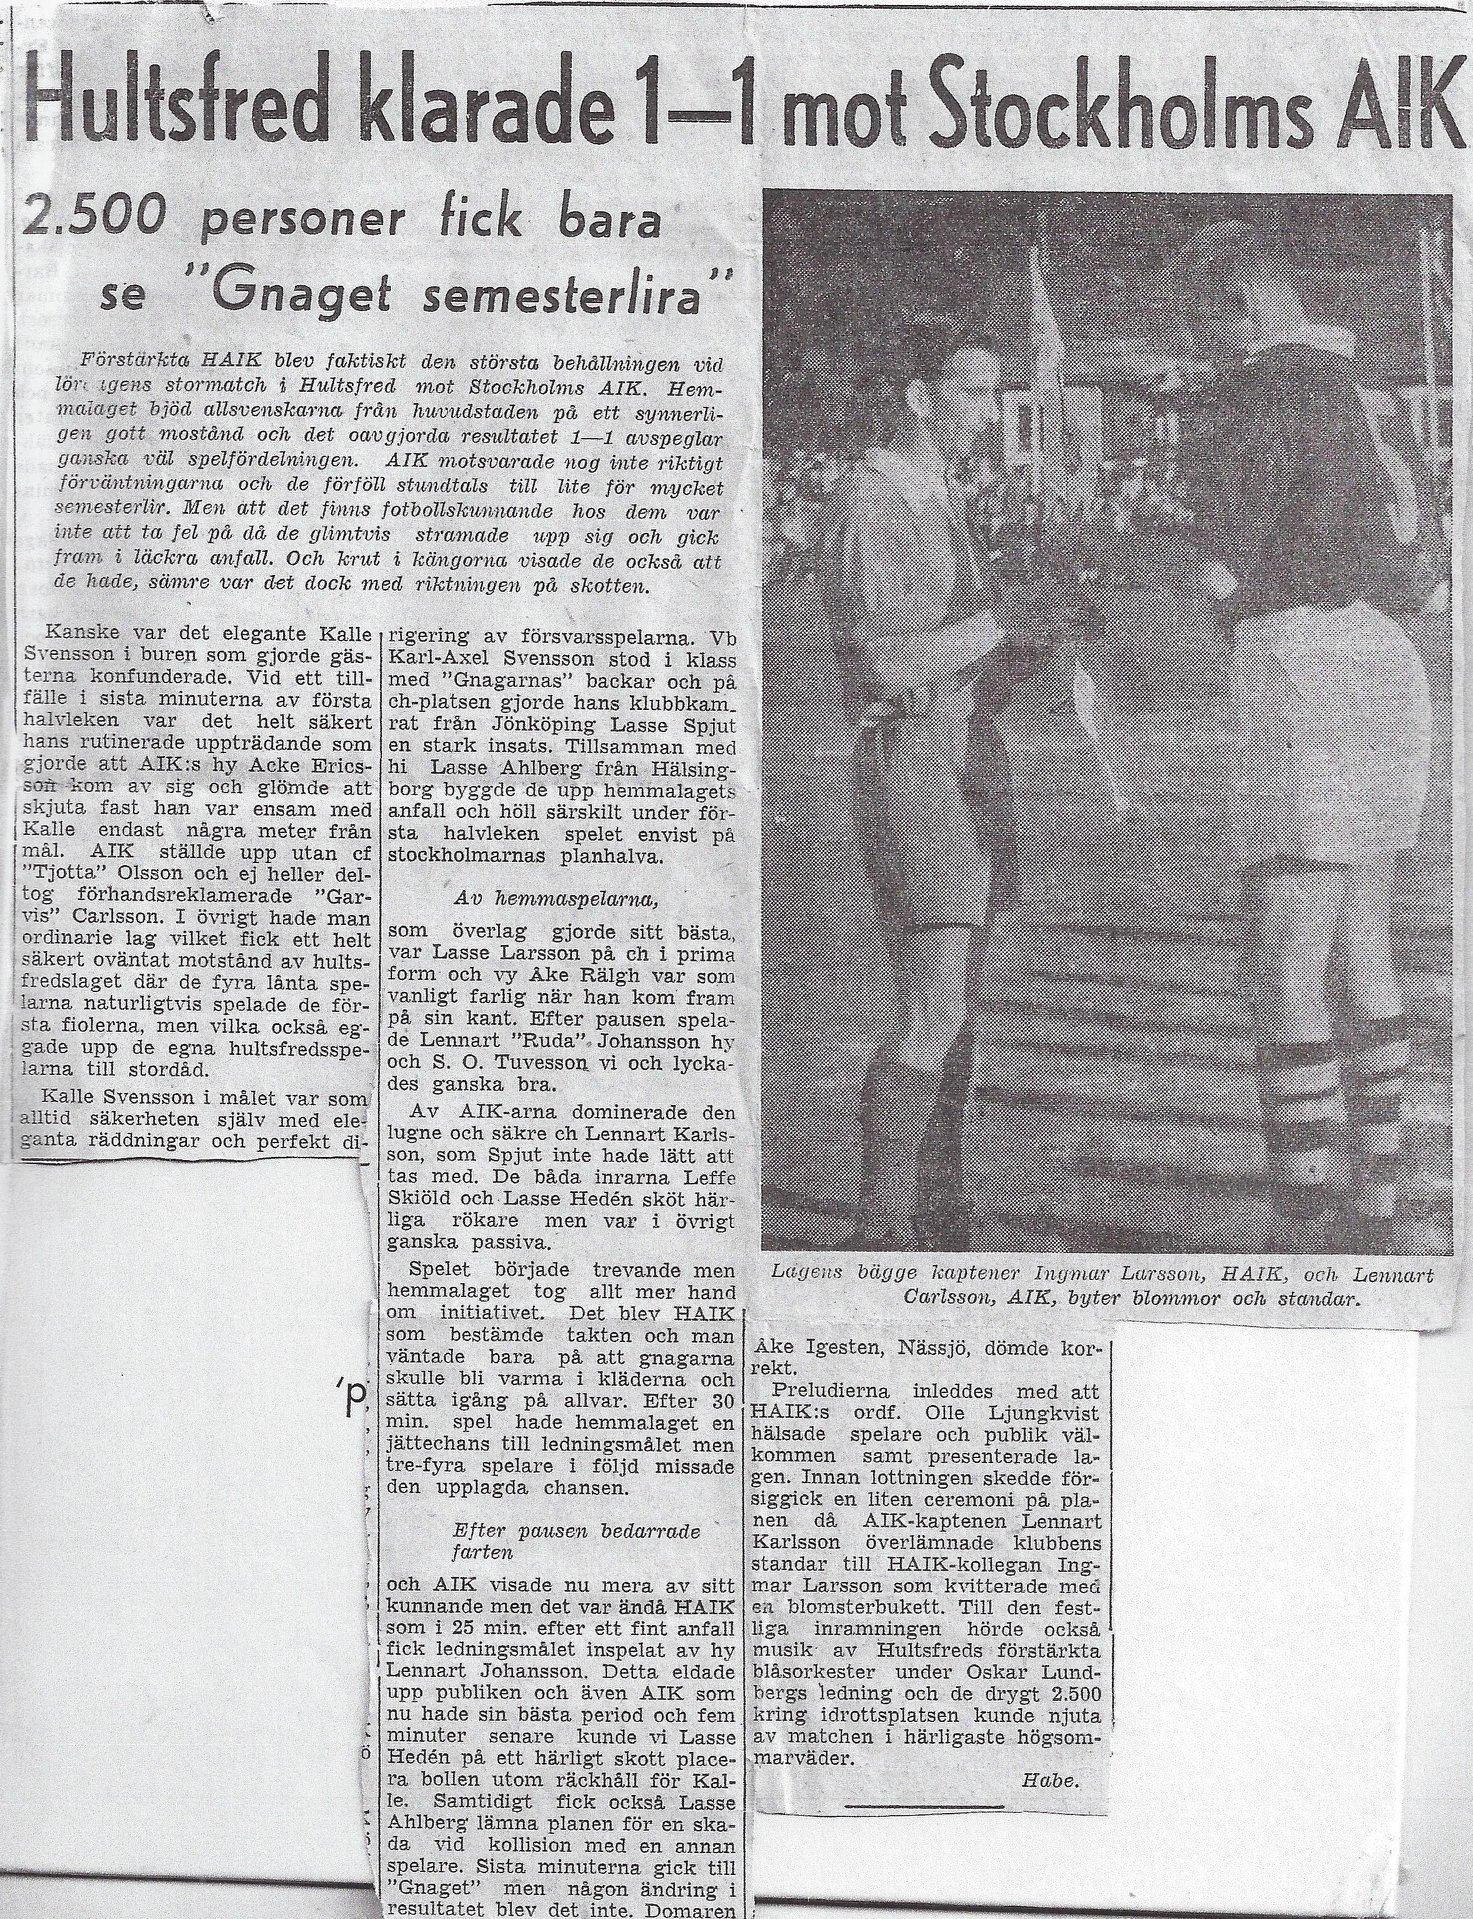 Thursday 14 June 1956  Hultsfreds AIK - AIK 1-1 (0-0)  Idrottsplatsen, Hultsfred